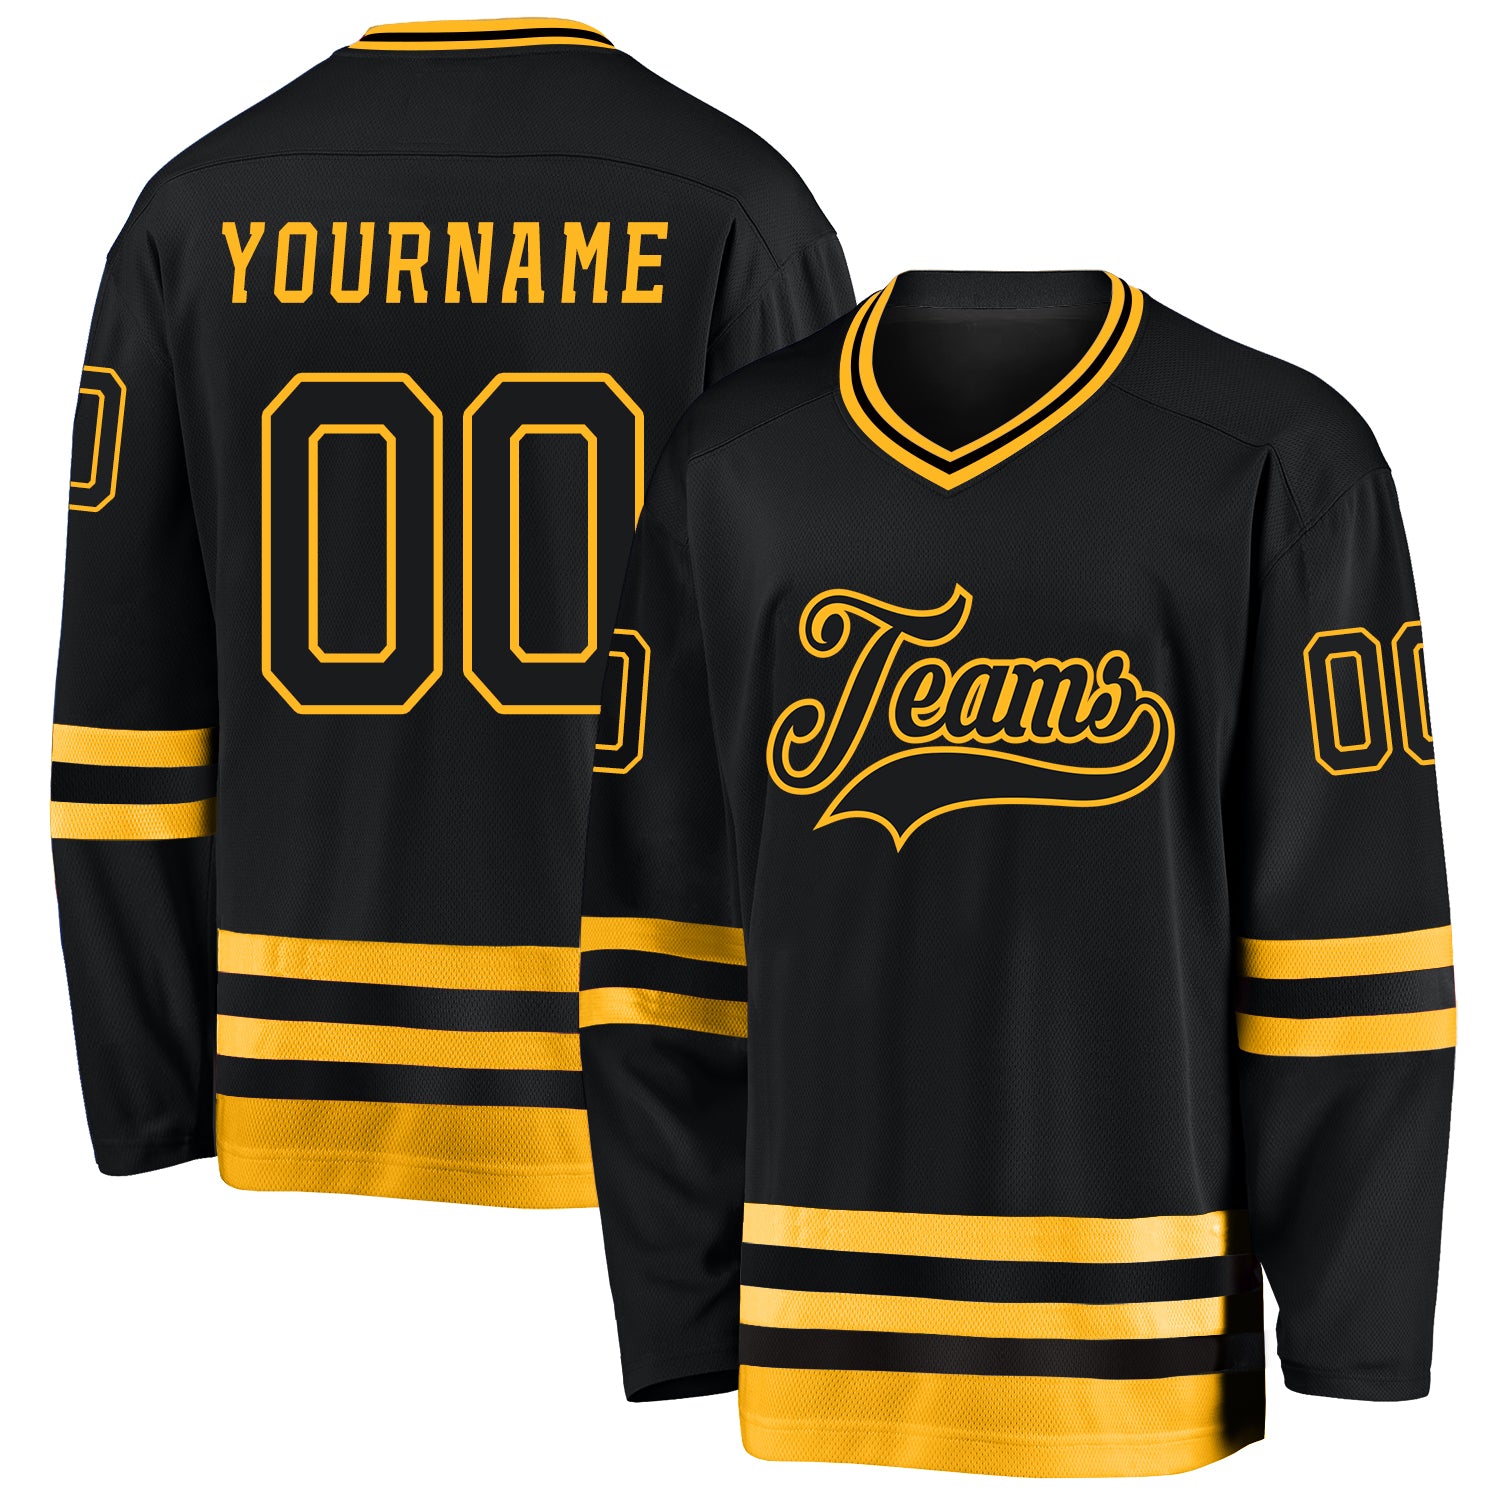 H6400 Black Custom Hockey Jerseys No Minimum Ice Hockey Uniforms - Buy  Hockey Jersey,Custom Hockey Jerseys No Minimum,Ice Hockey Uniforms Product  on